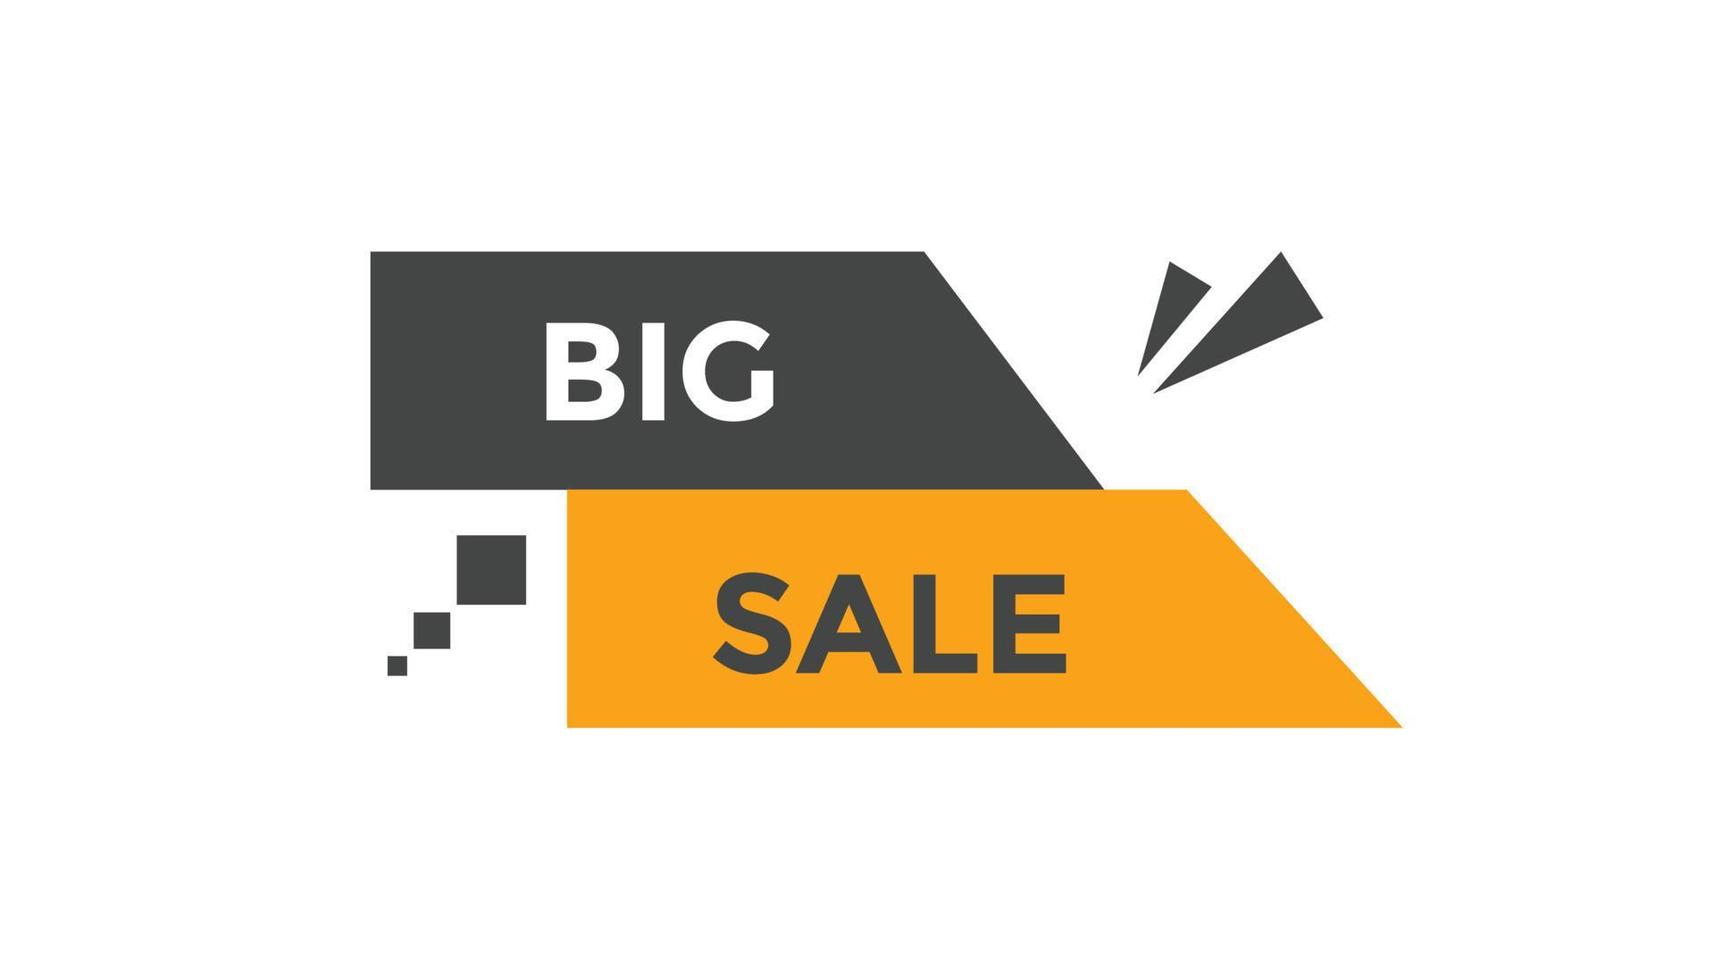 Big sale button web banner templates. Vector Illustration